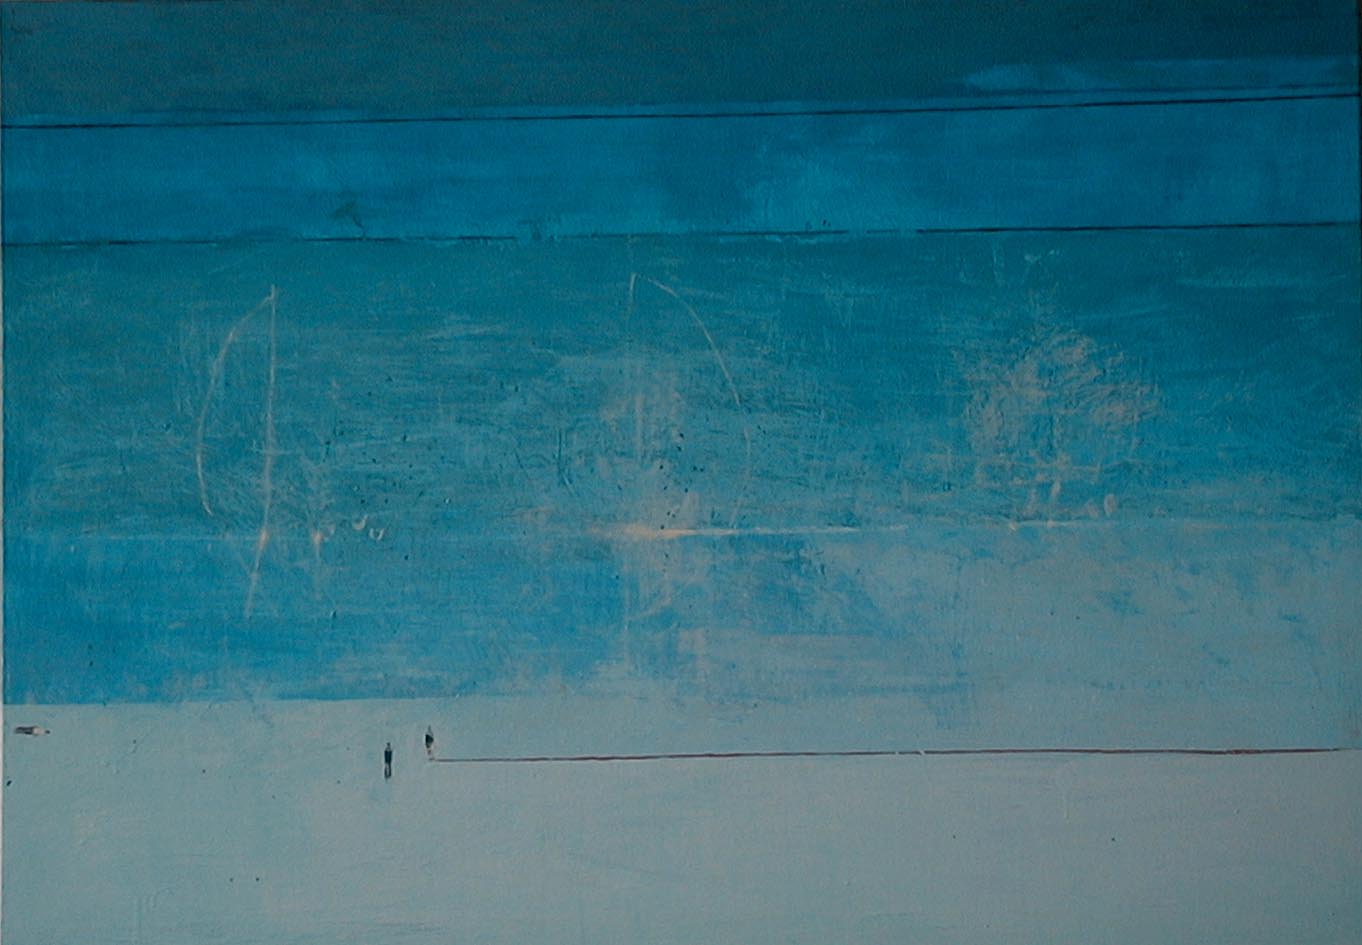 Mendrek Pawel 
"Life of the Horizon 12 Uhr", 2002
Acryl / Leinwand
100 x 140 cm